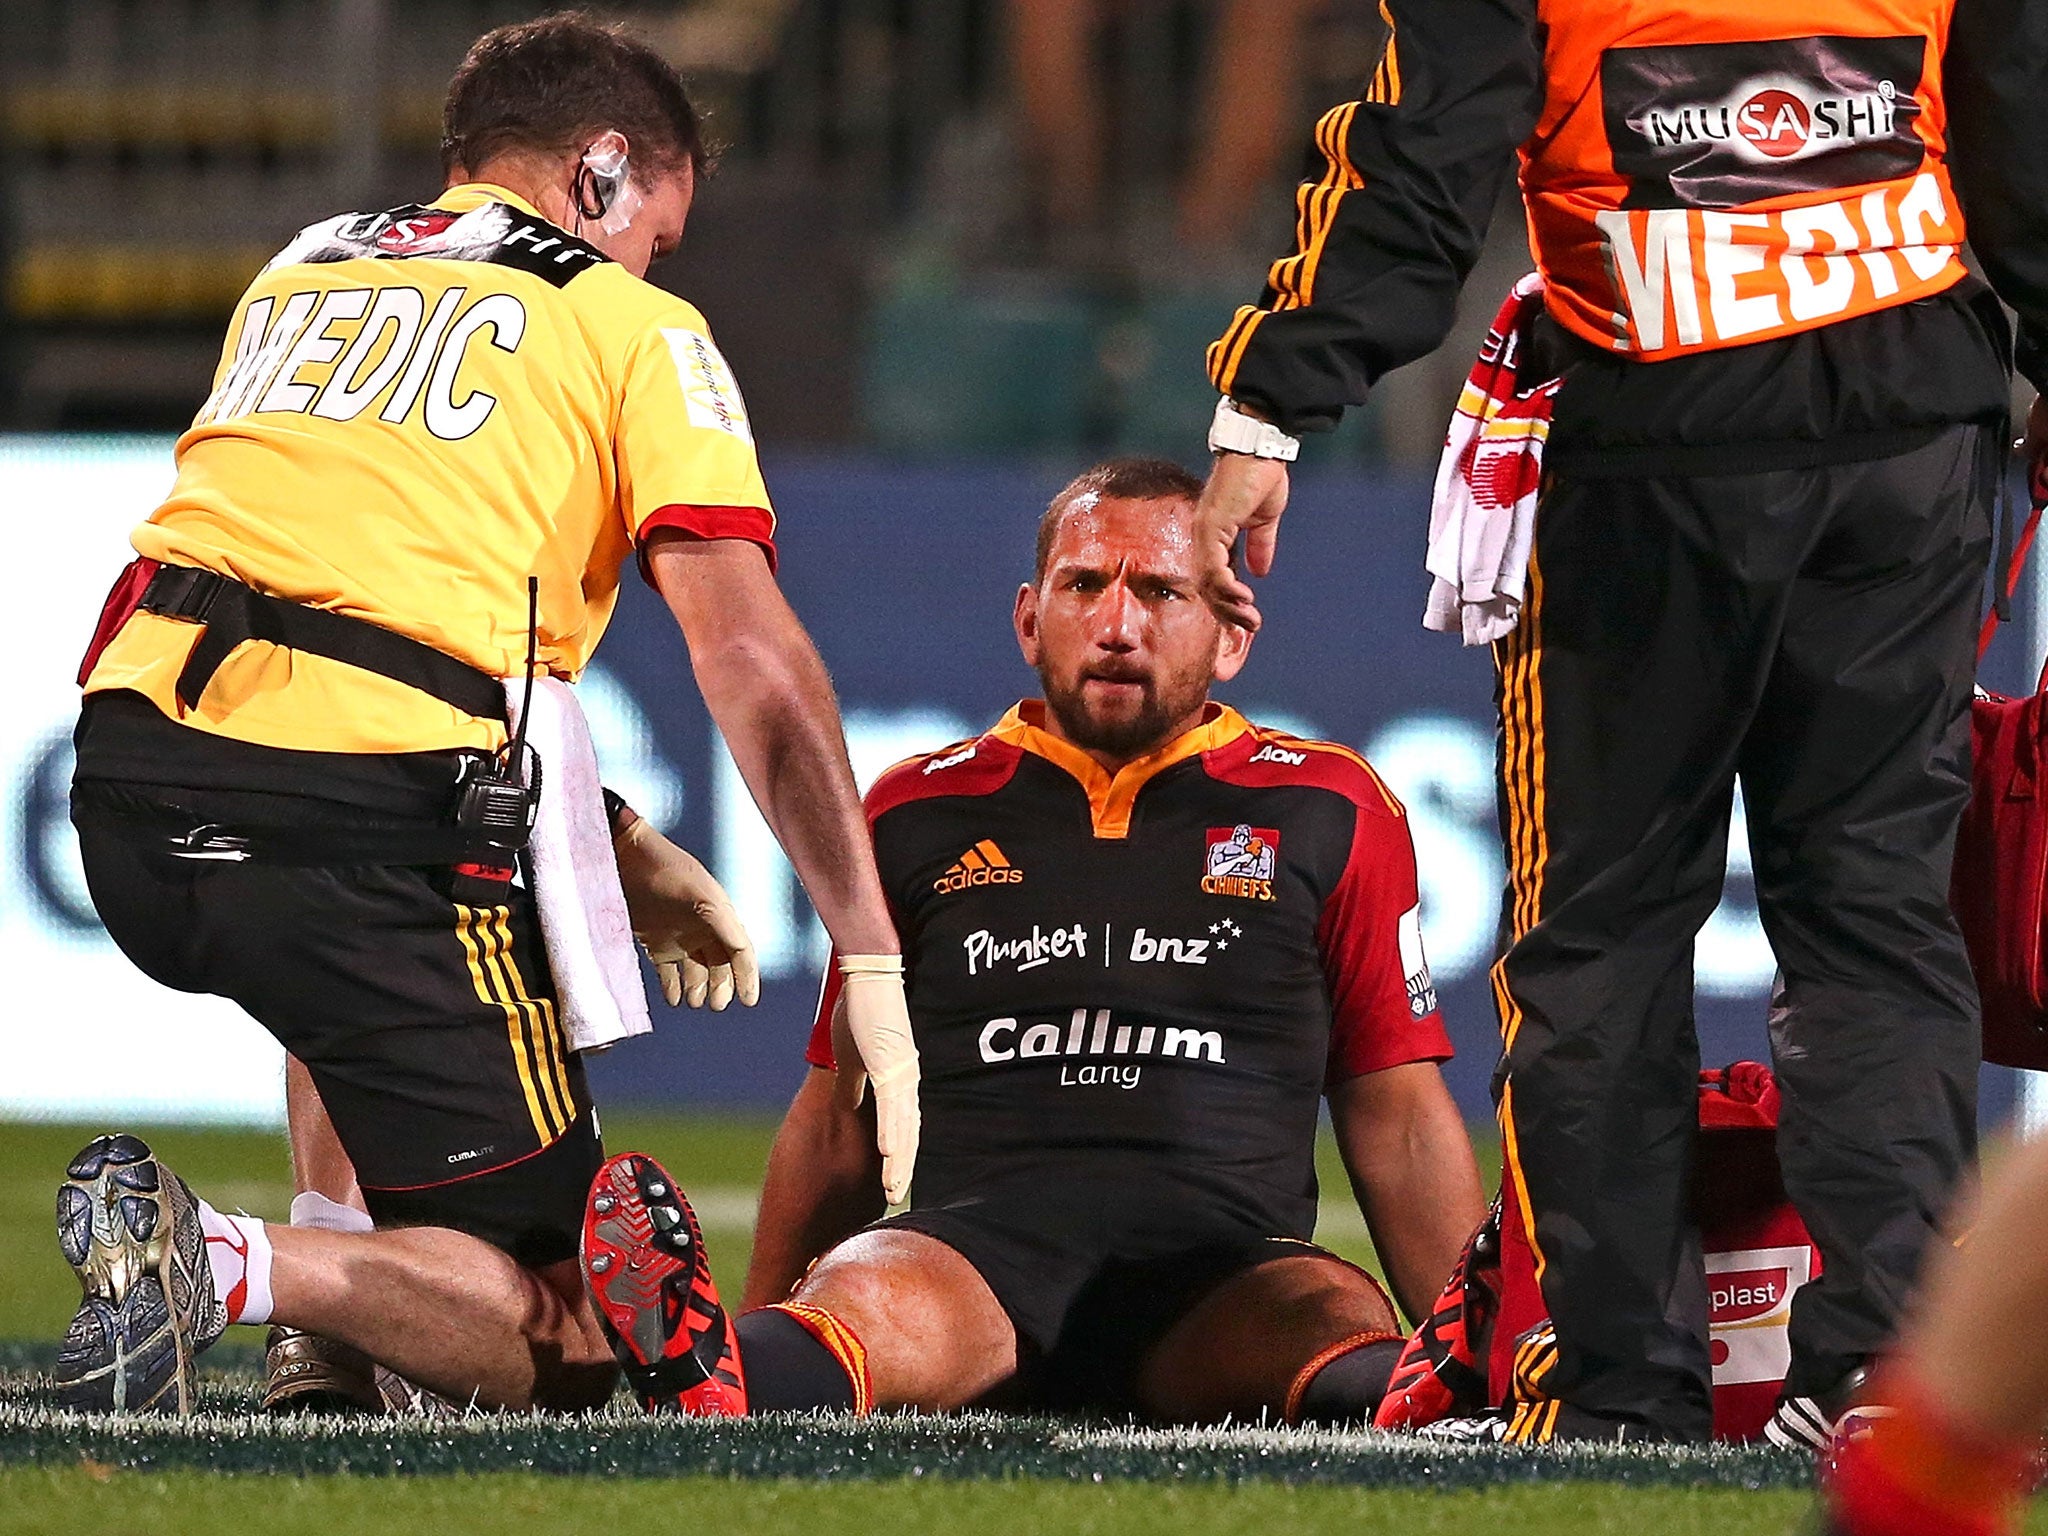 New Zealand fly-half Aaron Cruden has suffered a ruptured cruciate ligament in his left knee